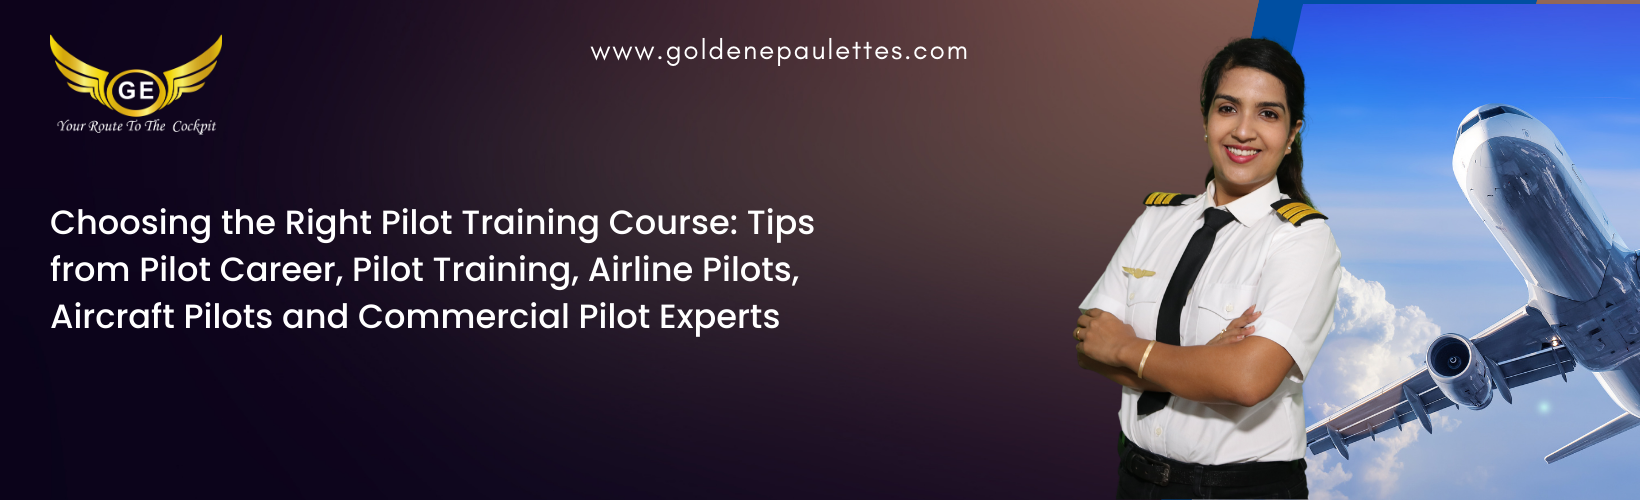 Qatar Airways Pilot Training